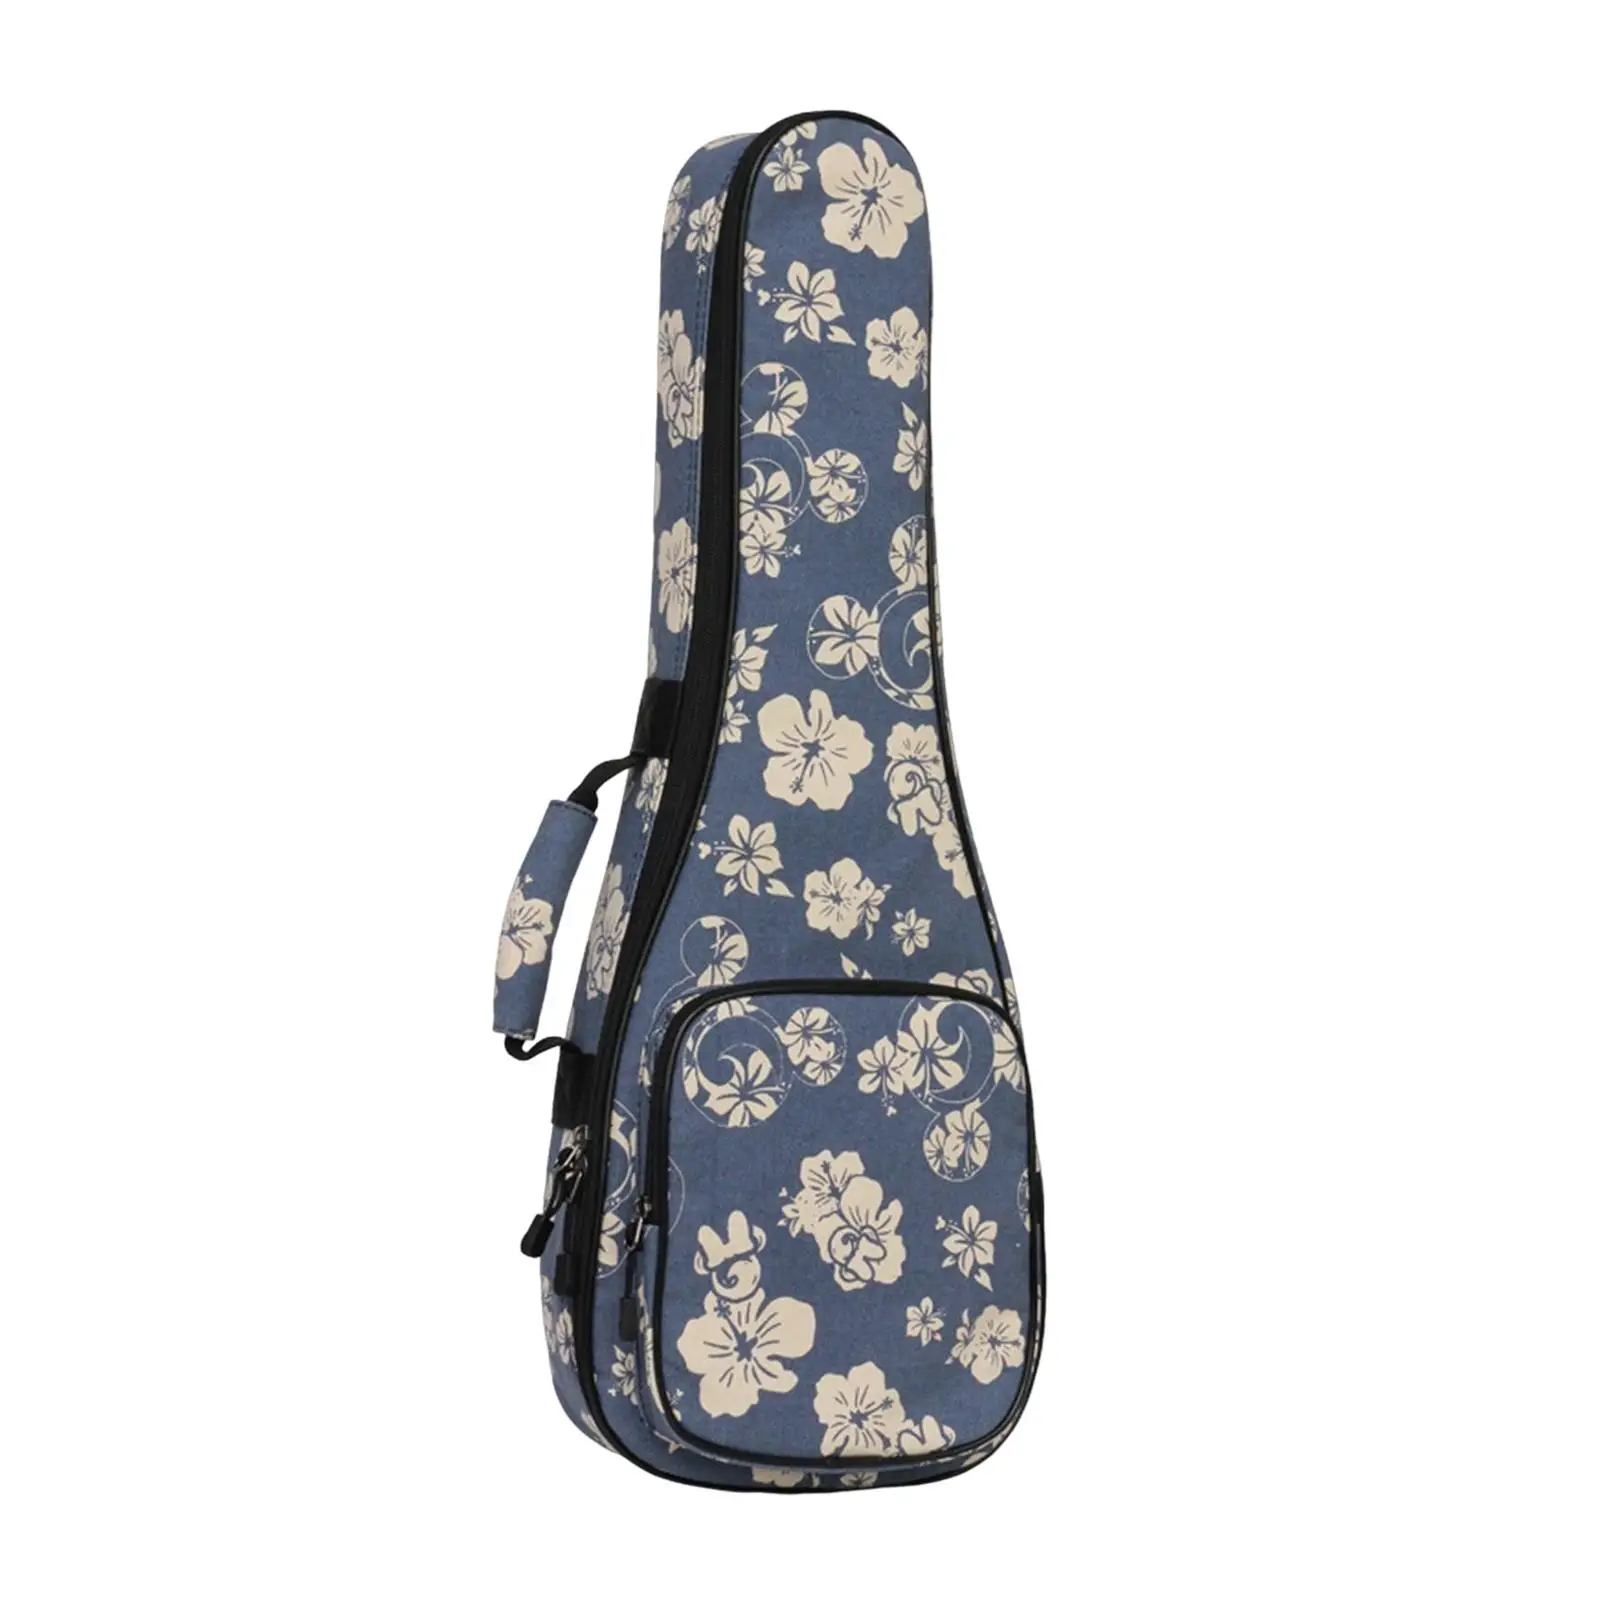 Musical Instrument Bag with Adjustable Straps for 31 Inch Ukulele for Sheet